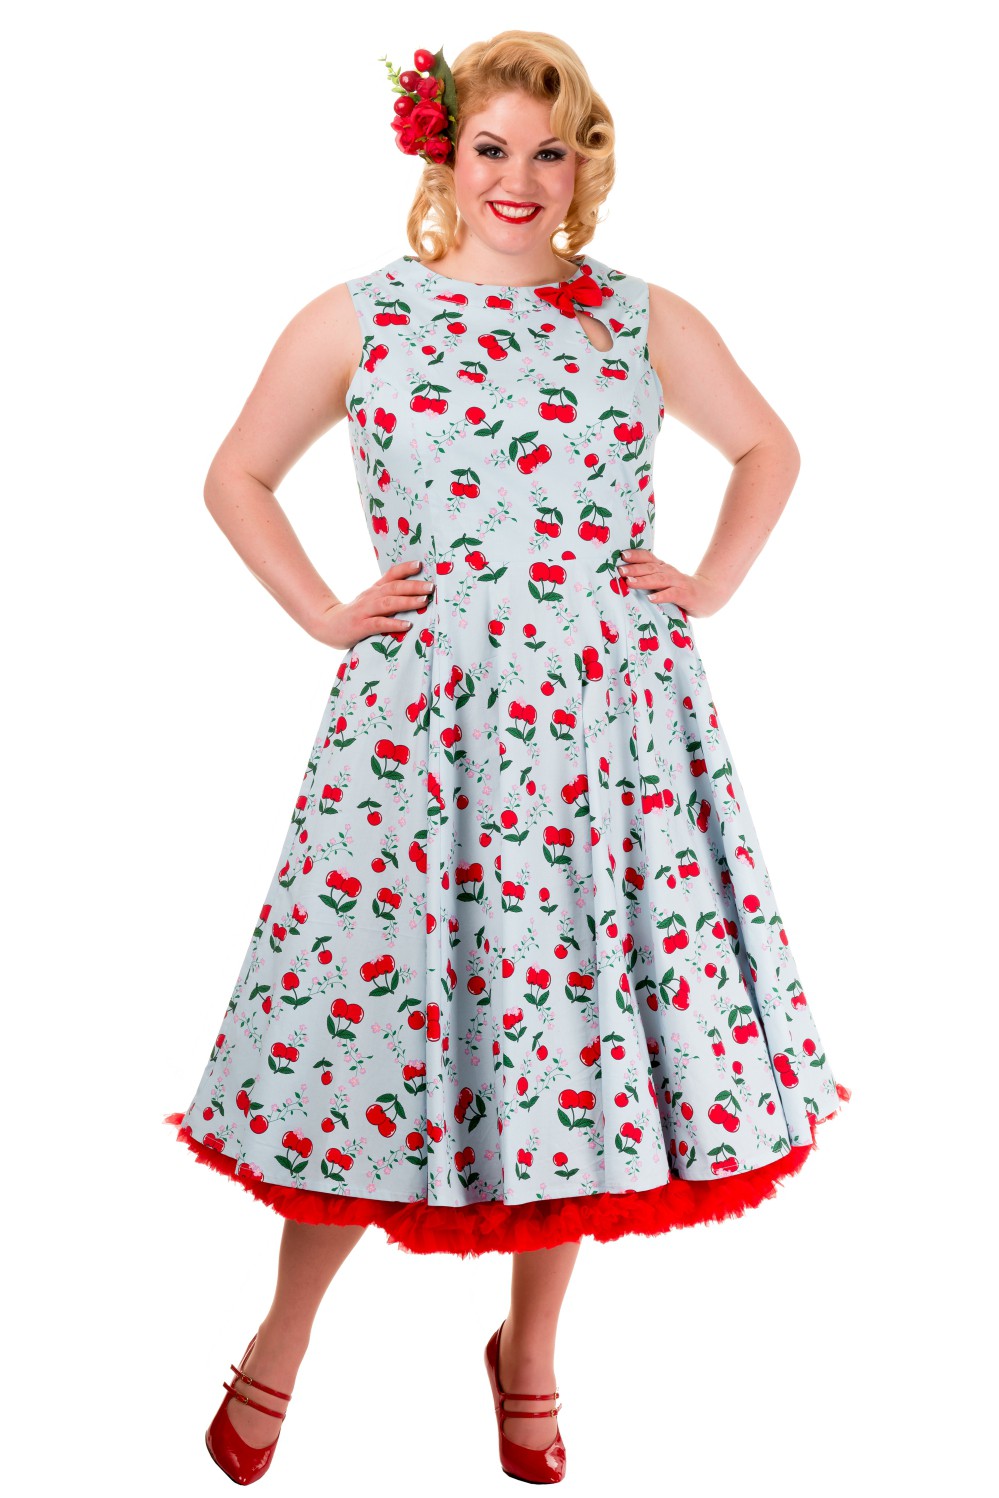 Banned Blindside 1950s Rockabilly Cherry Dress